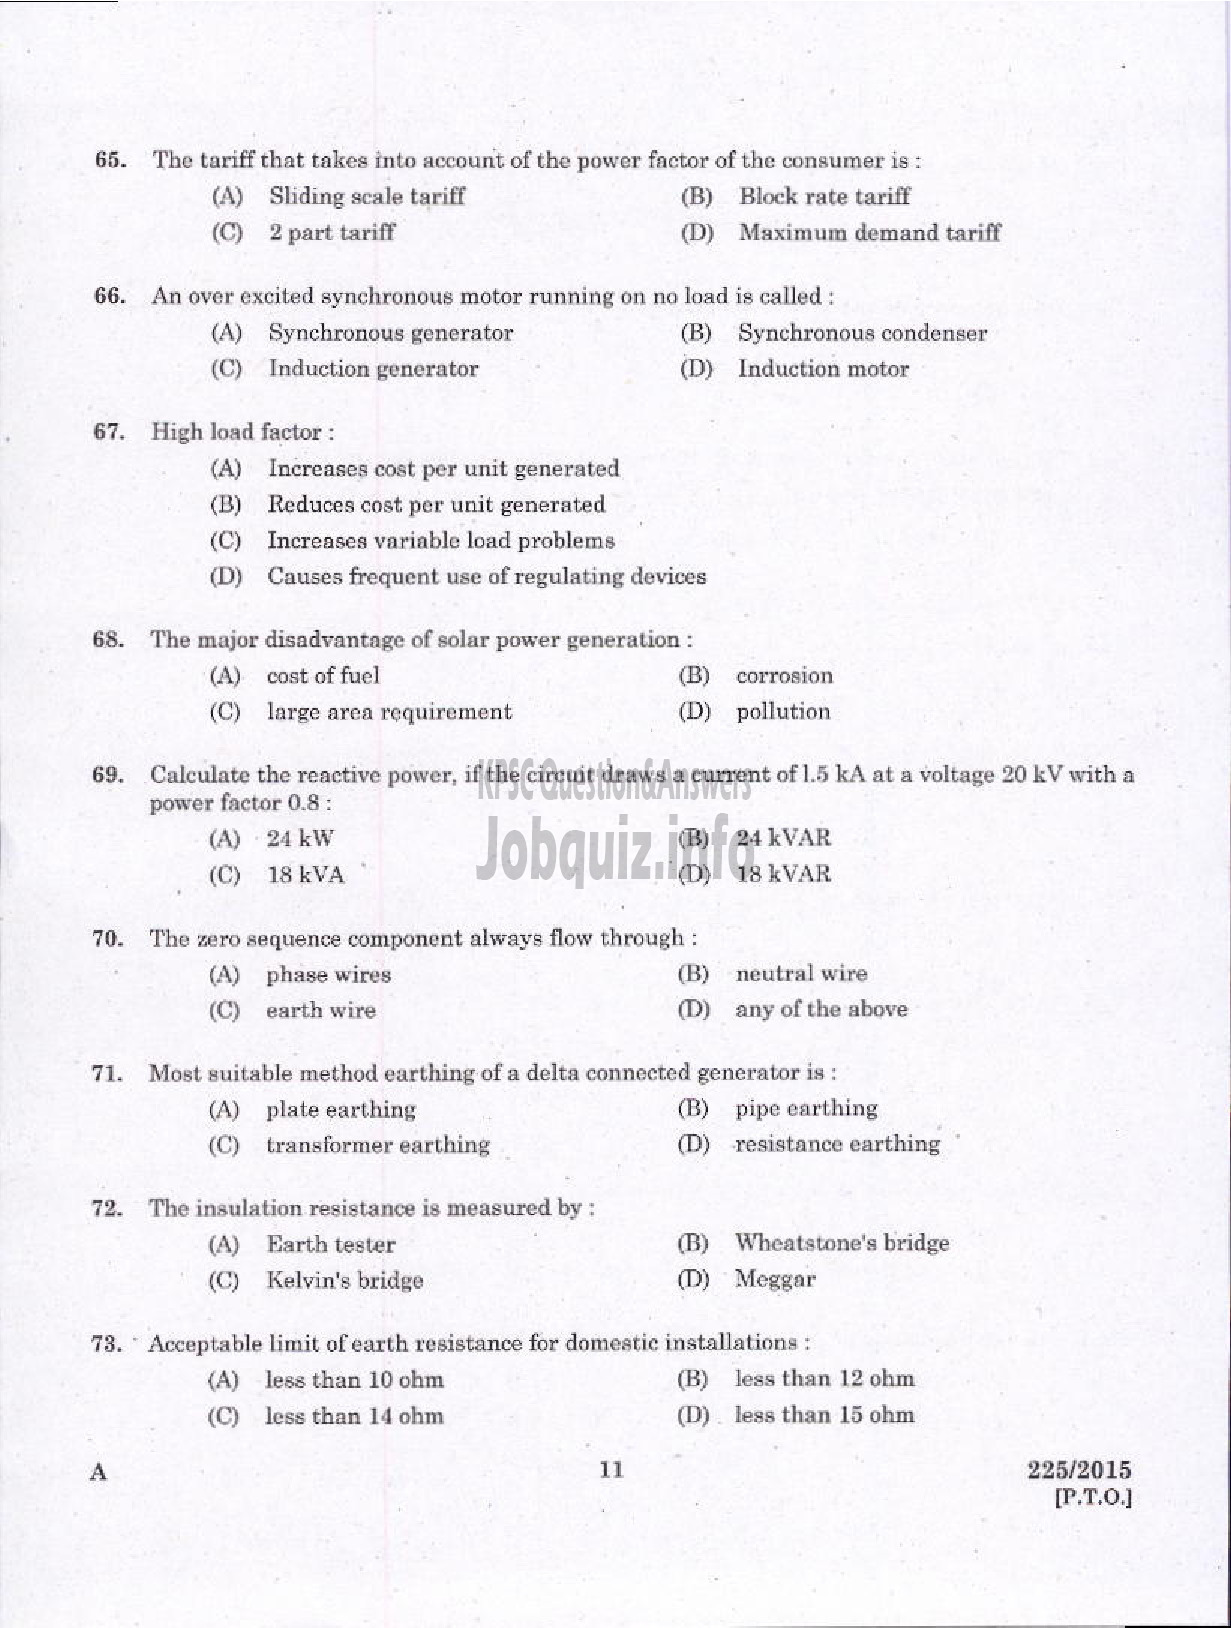 Kerala PSC Question Paper - VOCATIONAL TEACHER MAINTENANCE AND REPAIRS OF DOMESTIC APPLIANCES VHSE-9